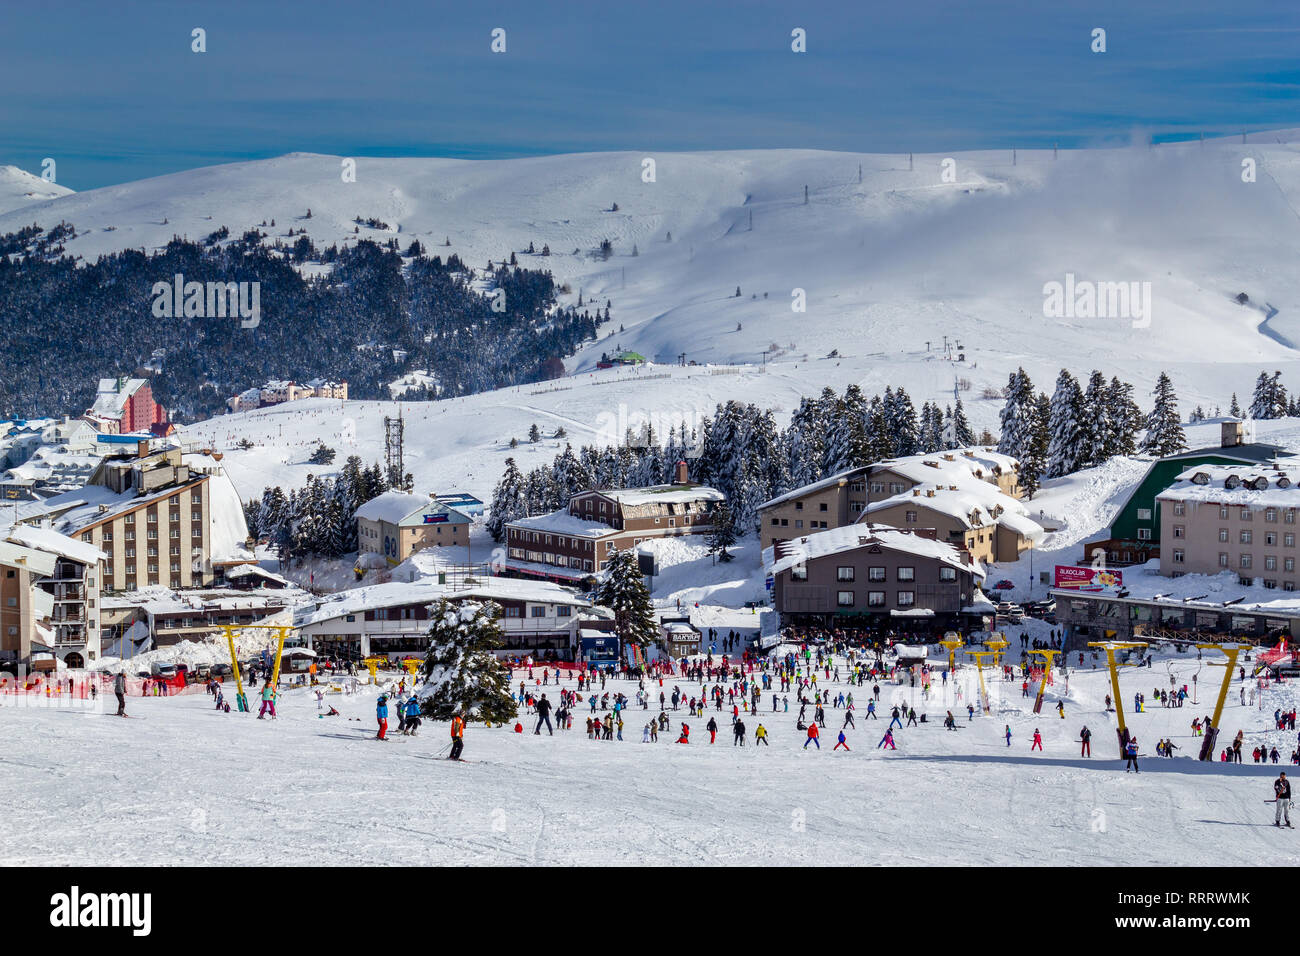 Uludag ski -Fotos und -Bildmaterial in hoher Auflösung – Alamy